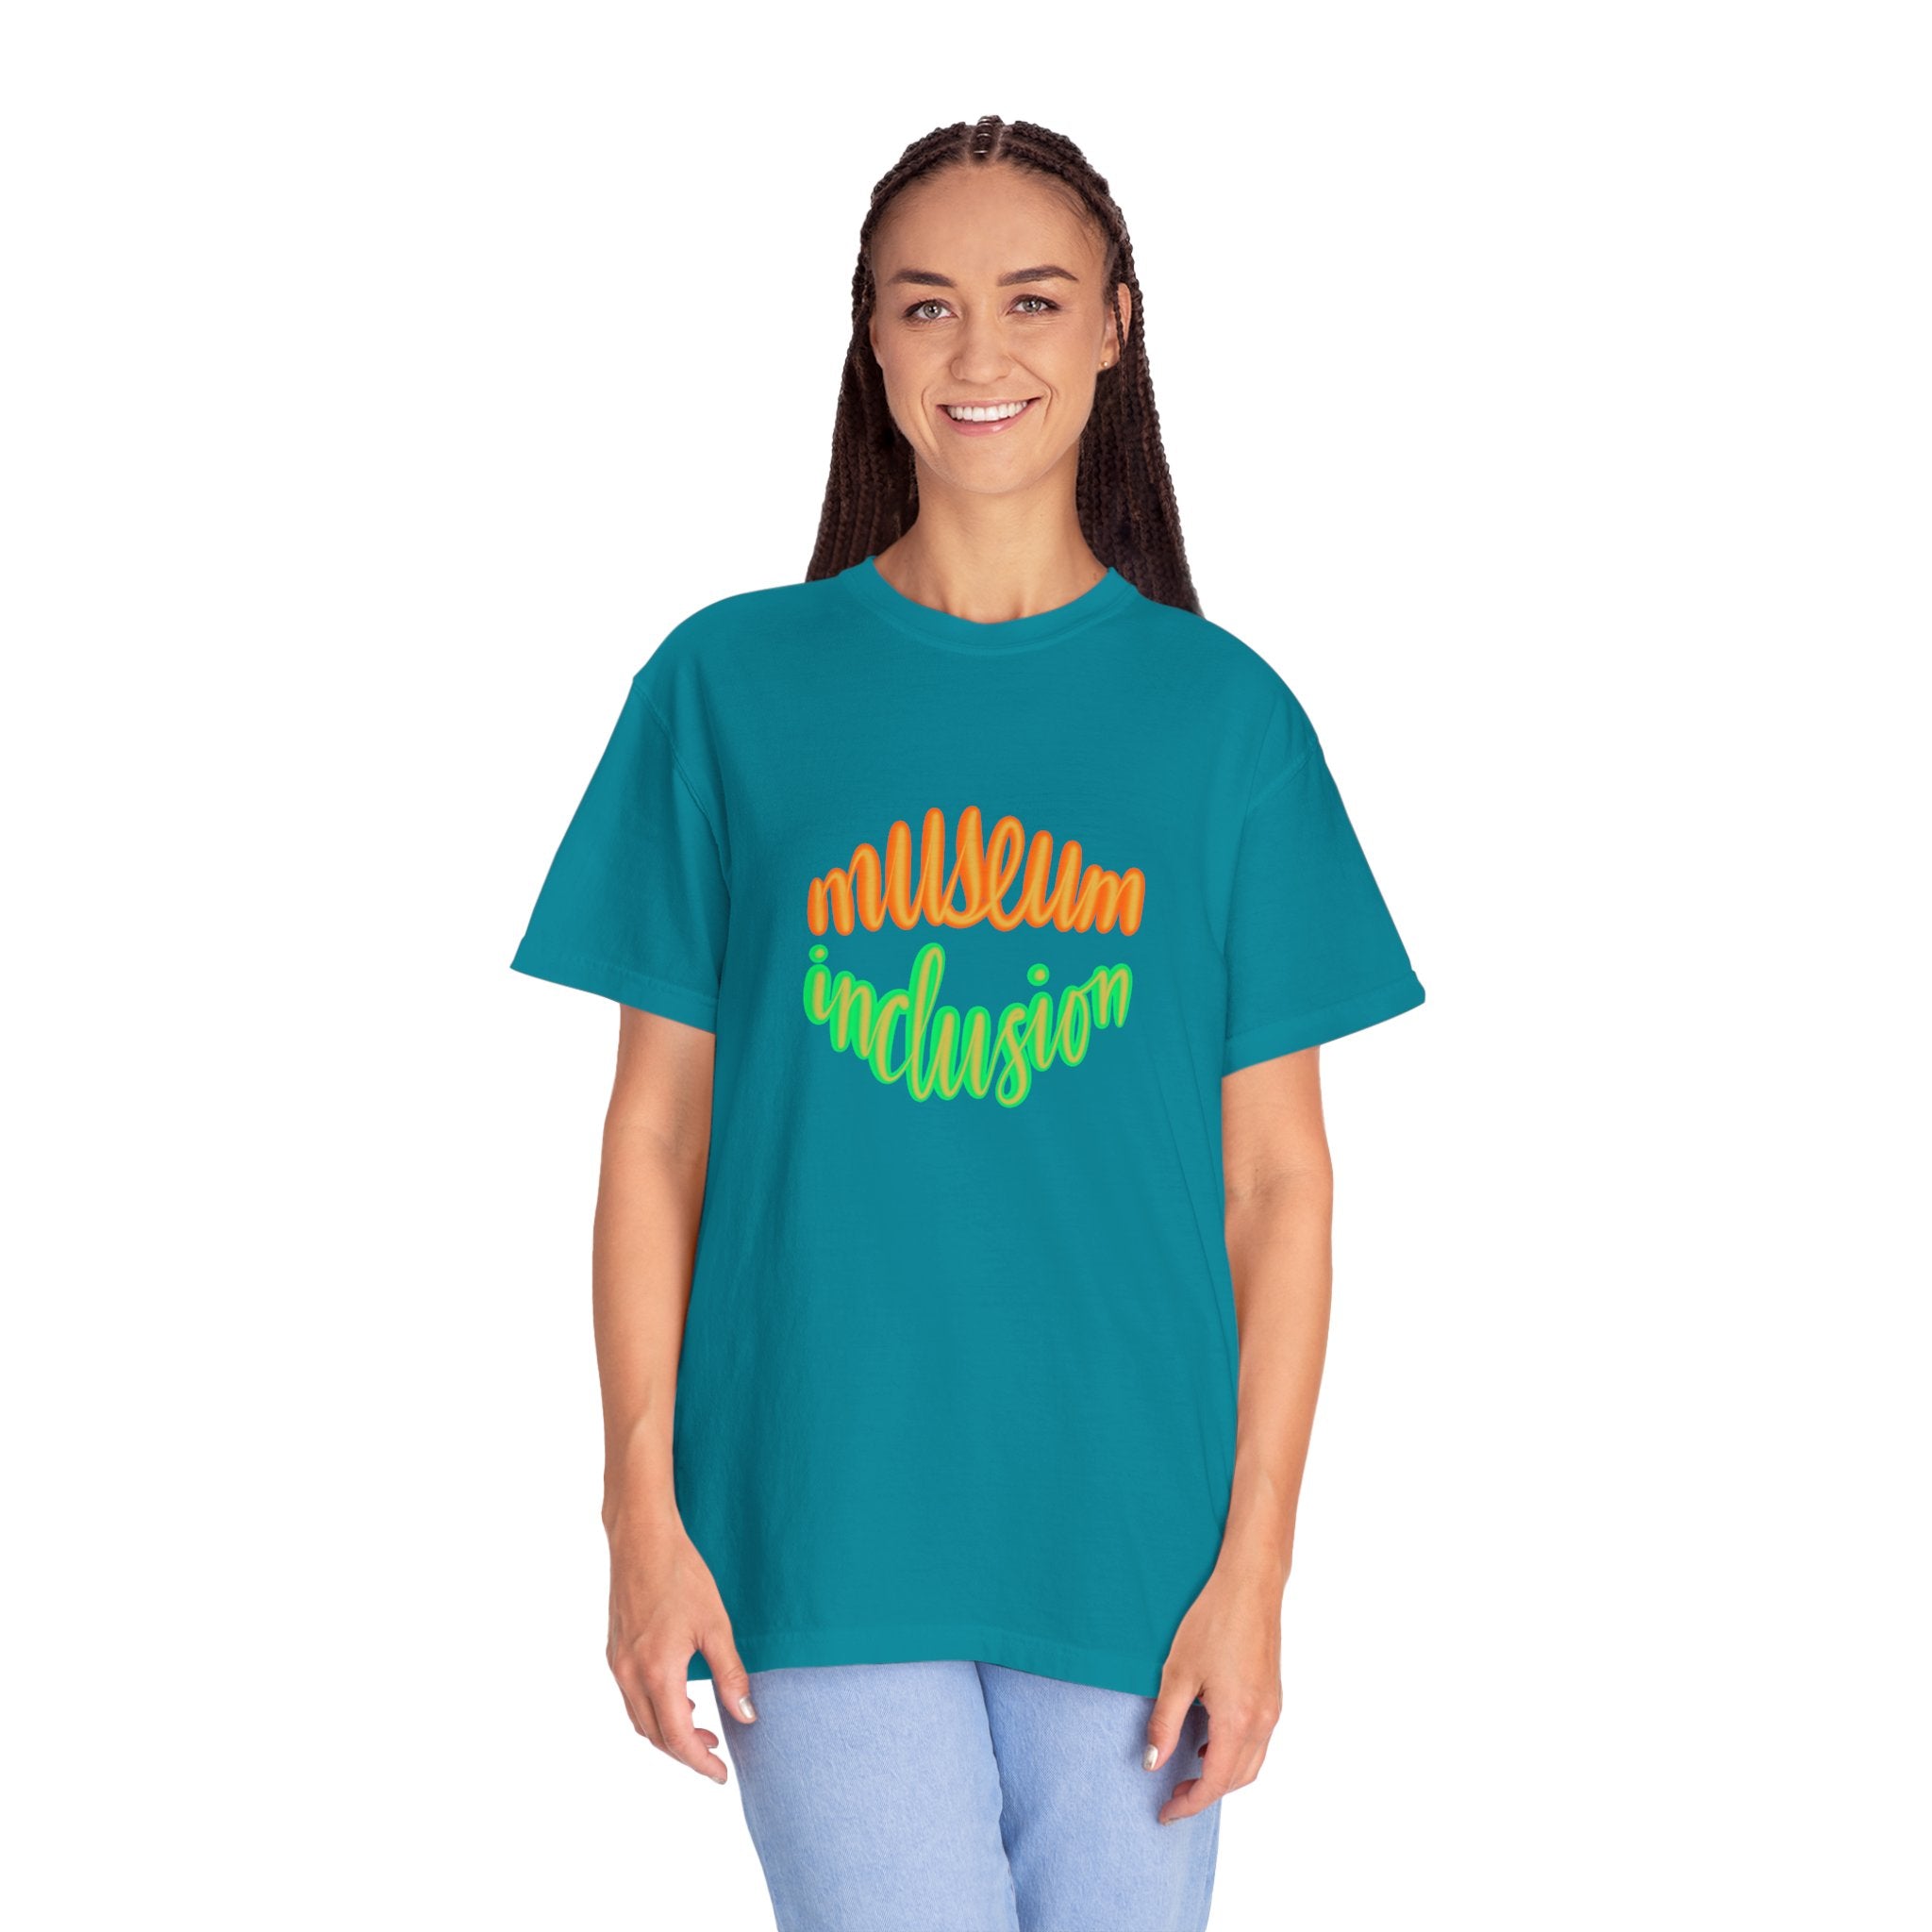 MUSEUM INCLUSION Unisex Garment-Dyed T-shirt